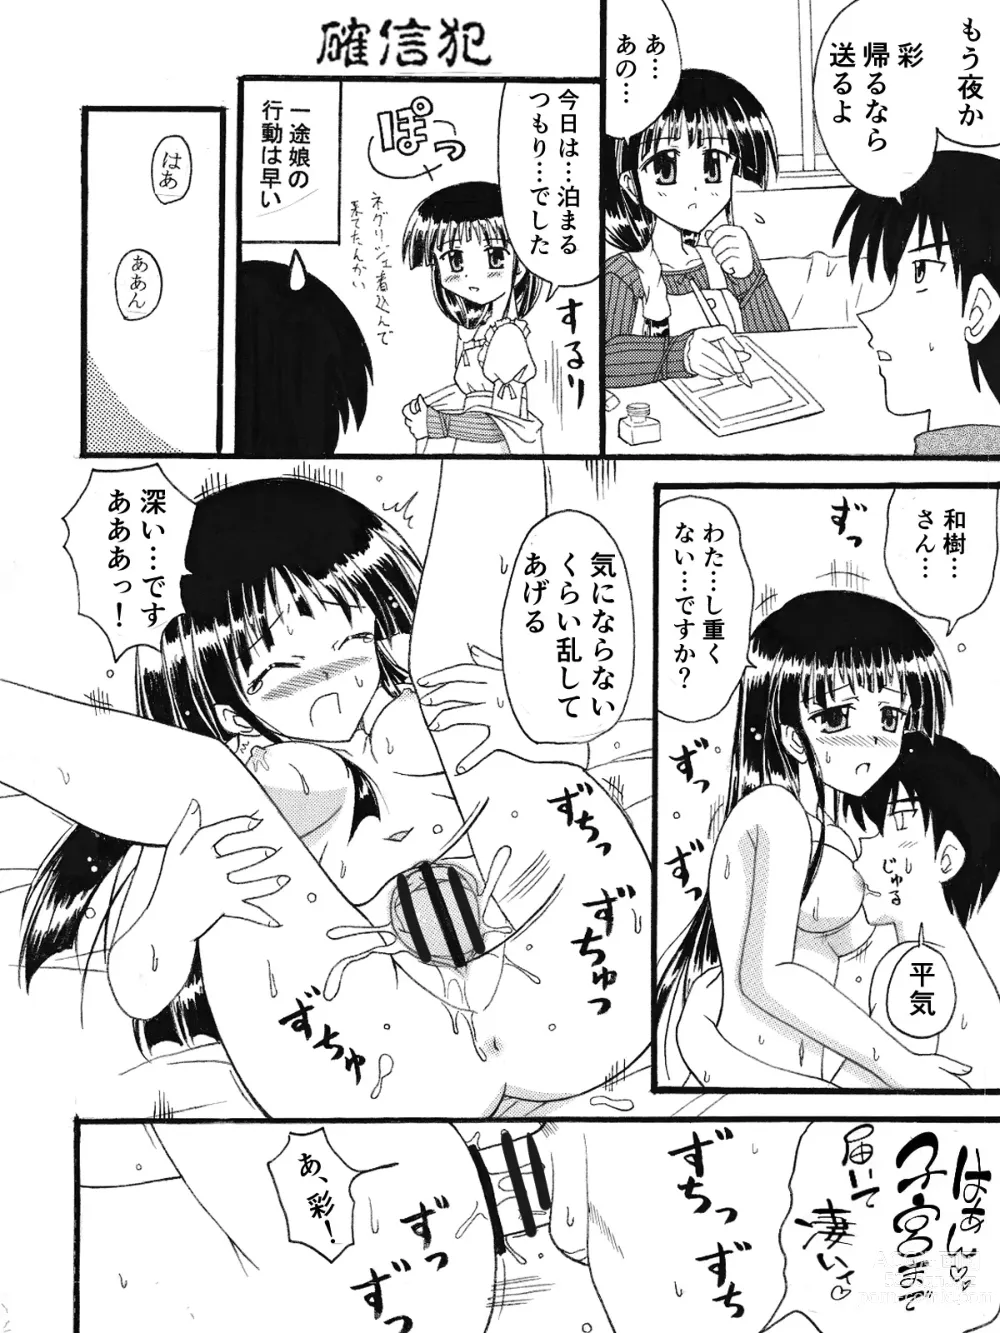 Page 16 of doujinshi Aya to Ayashii Kyoudou Sagyou